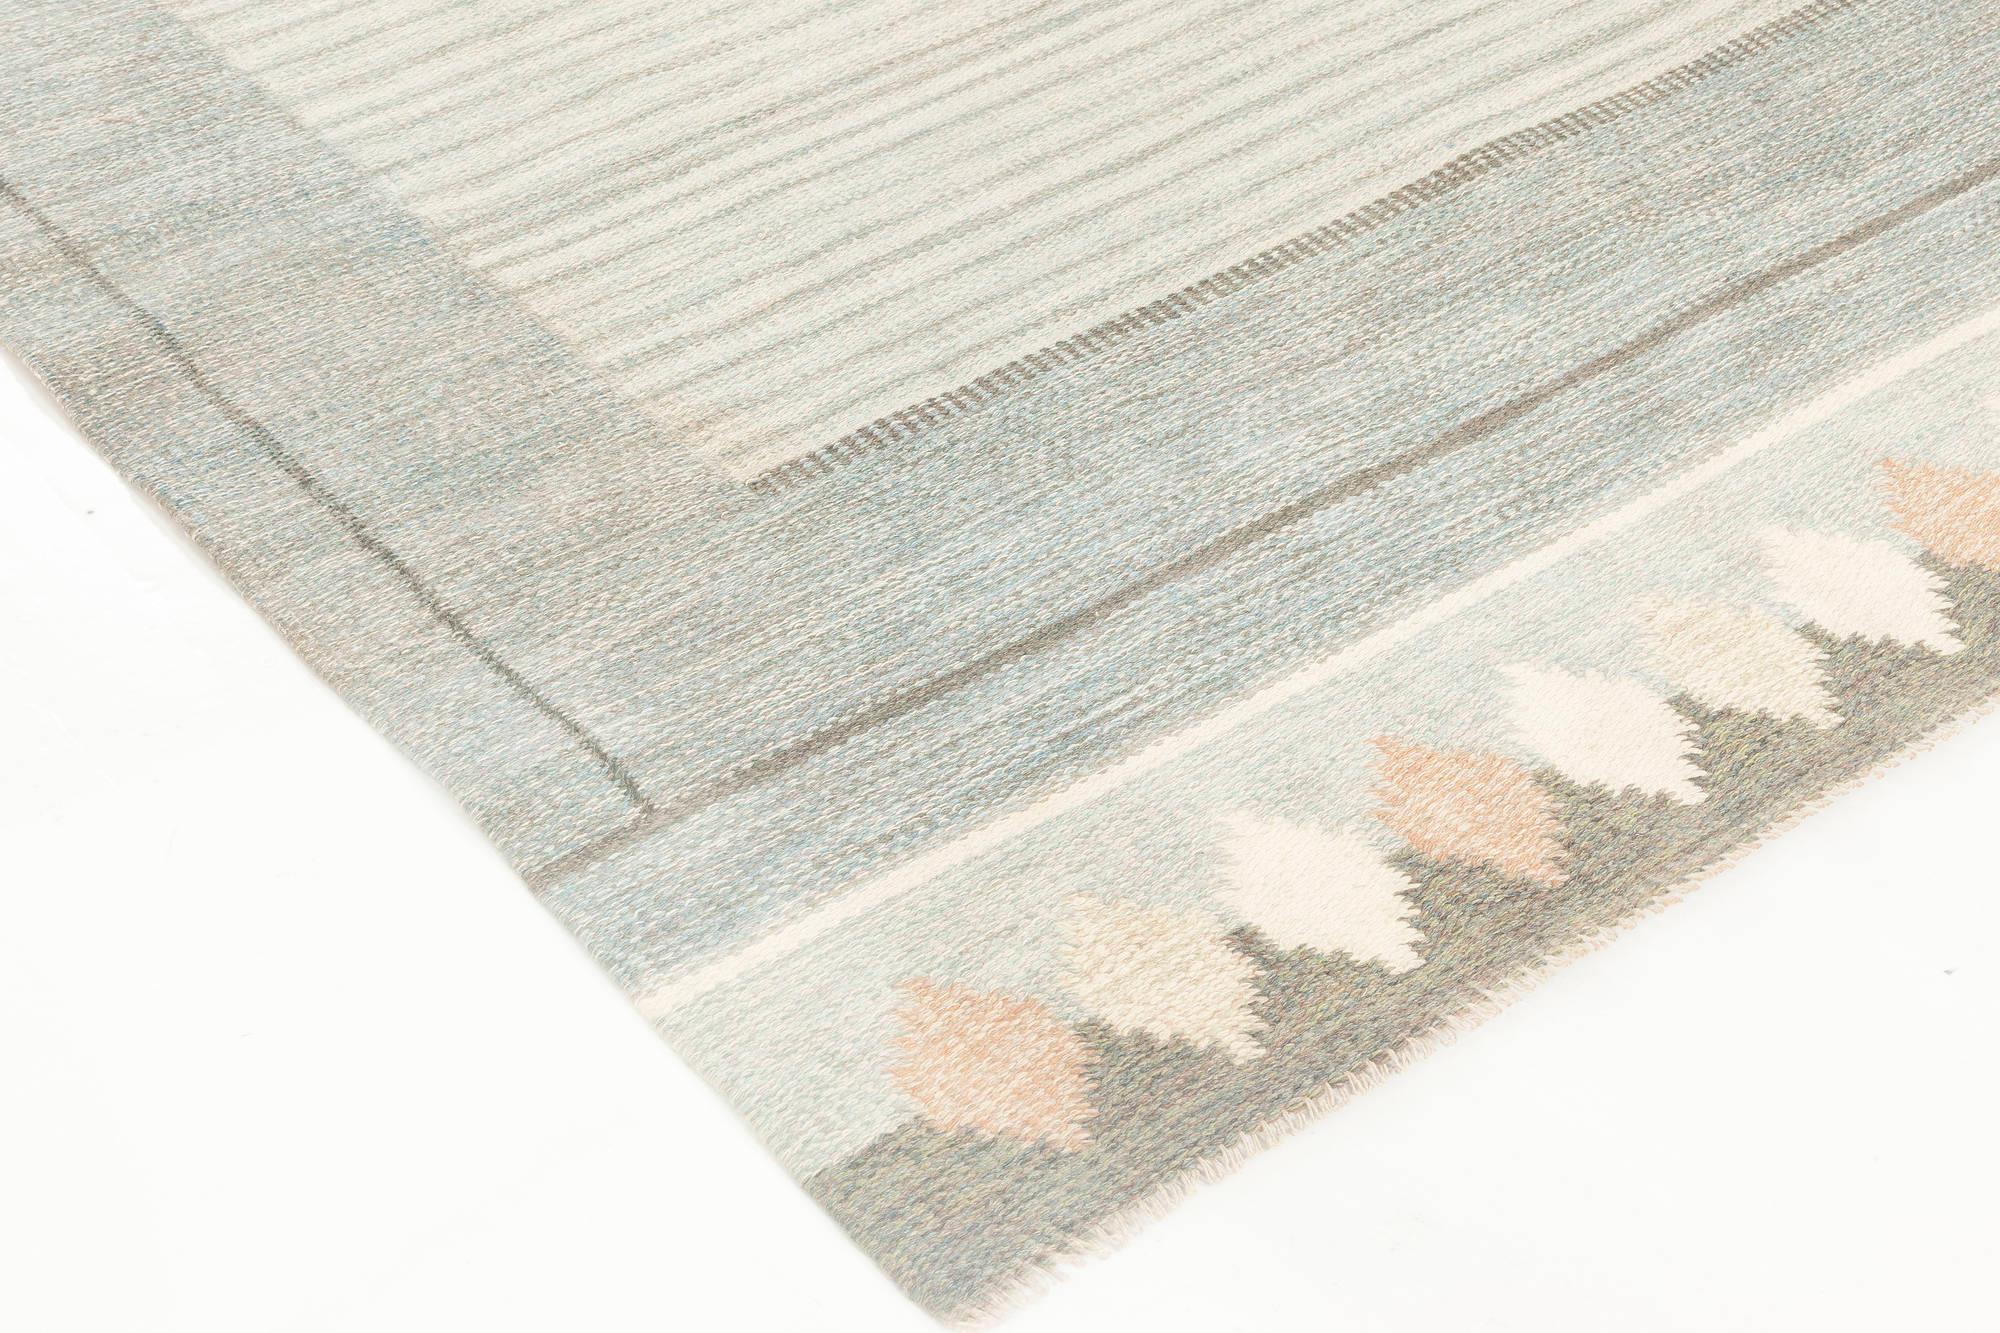 20th Century Midcentury Swedish Flat-Weave Rug by Ingegerd Silow